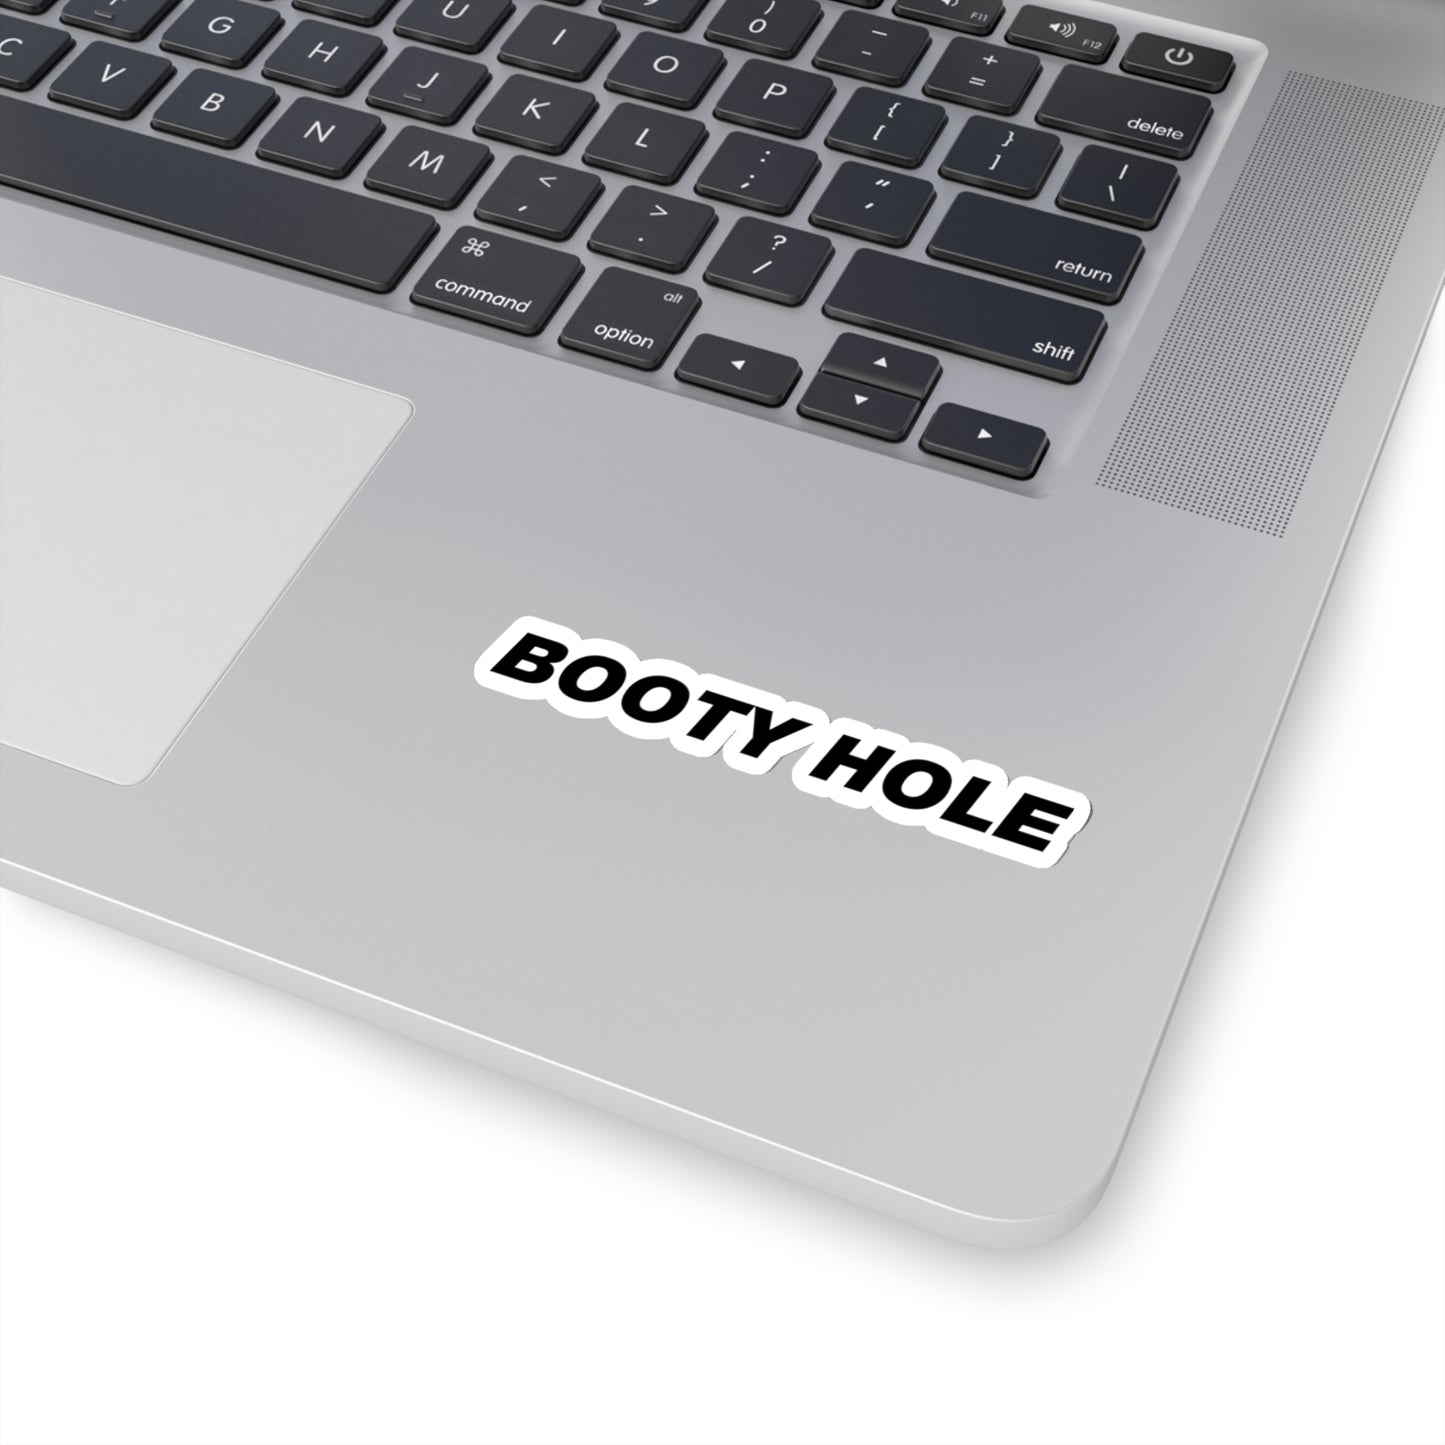 Booty Hole, Funny Meme Sticker